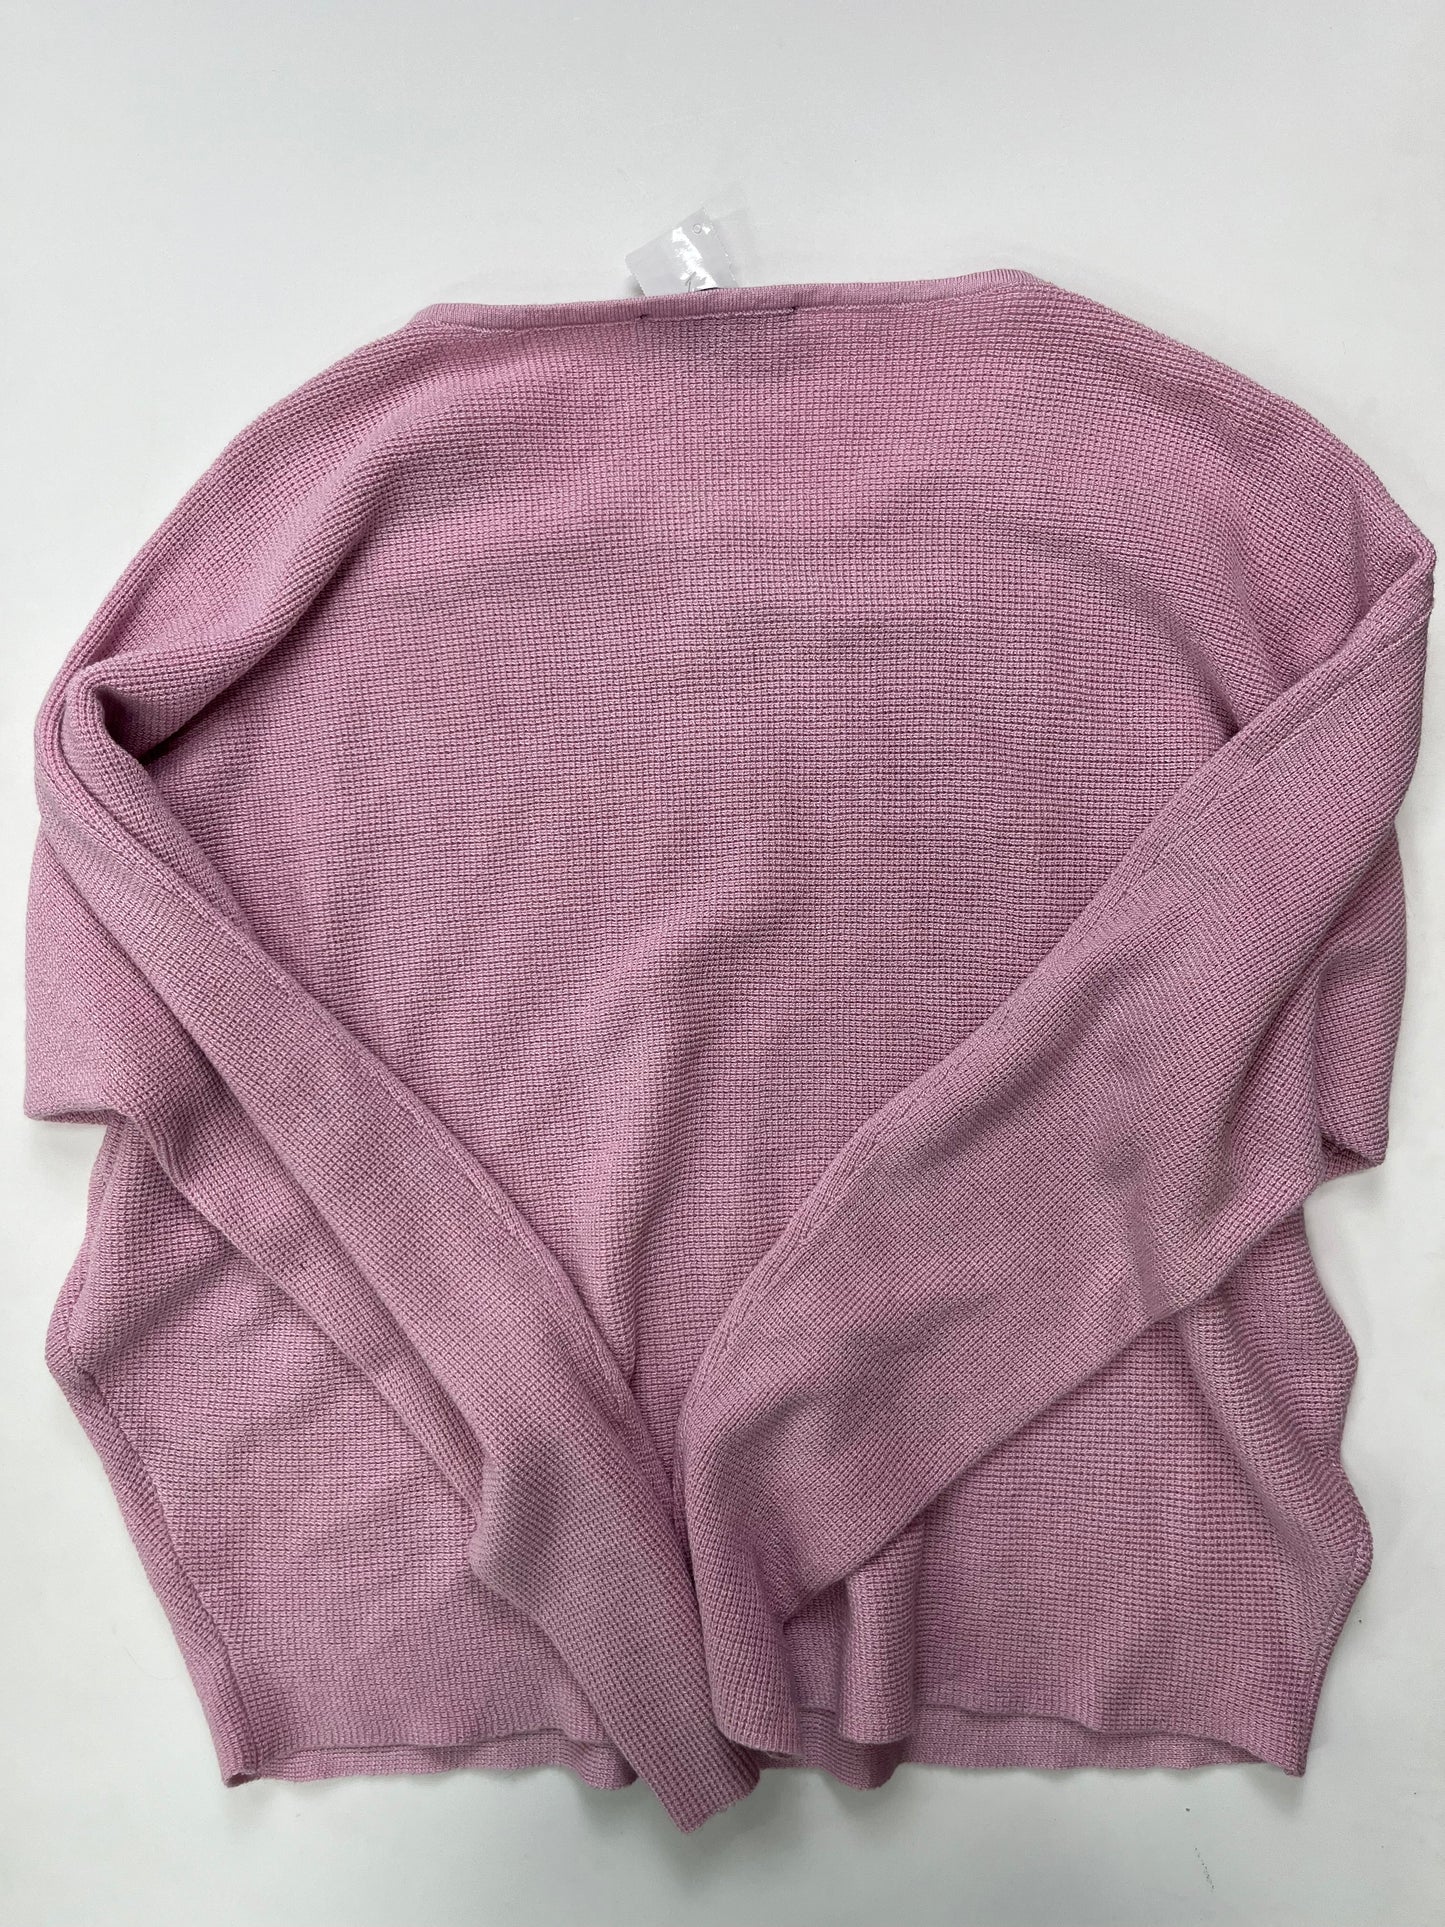 Sweater By Cyrus Knits  Size: L